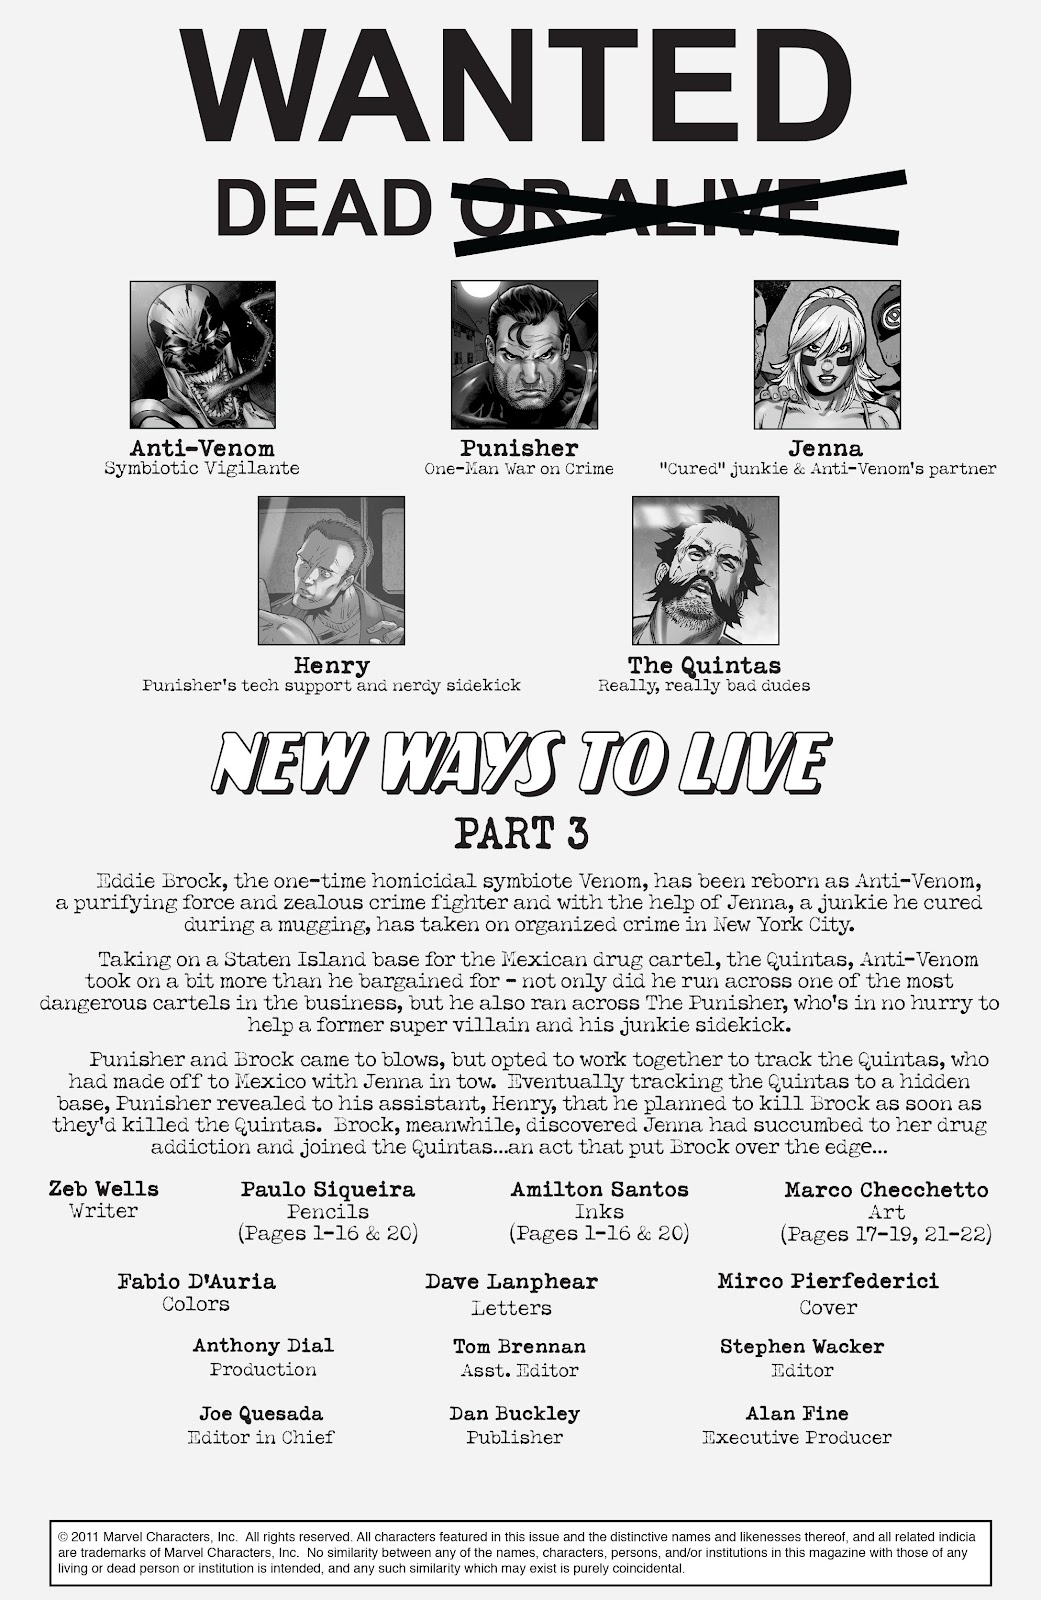 Amazing Spider-Man Presents: Anti-Venom - New Ways To Live issue 3 - Page 2